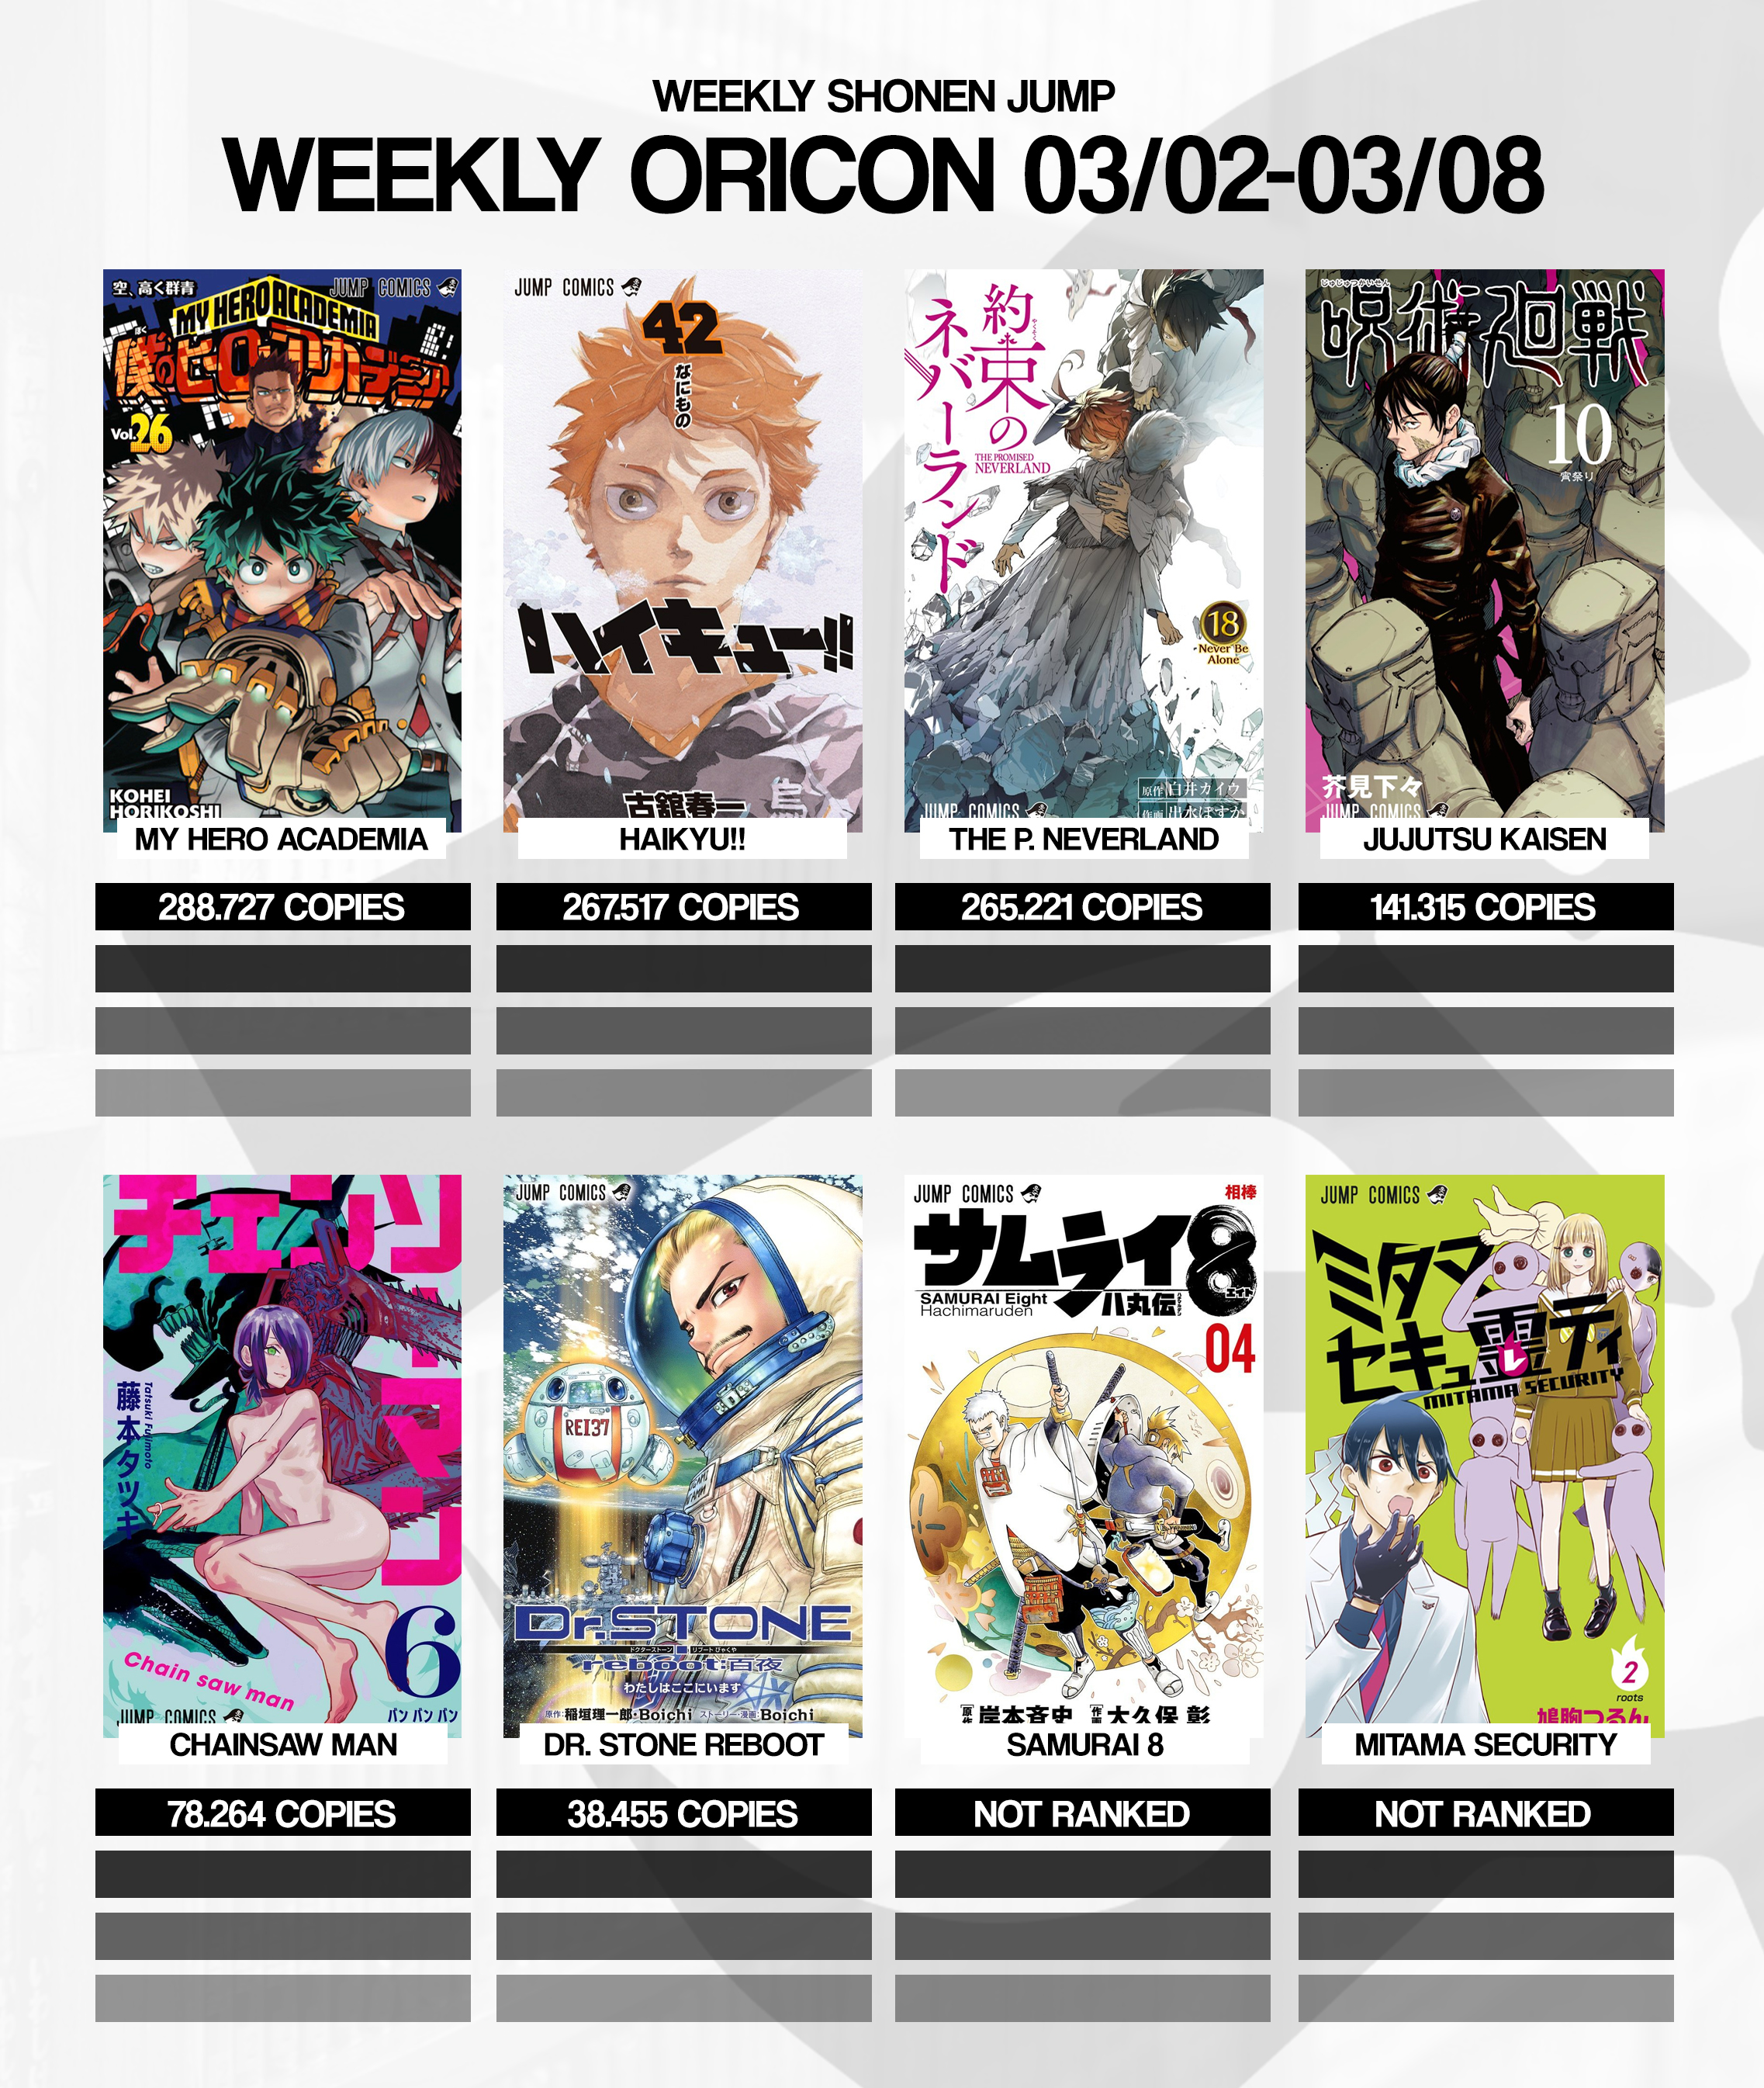 RANKING DOS PERSONAGENS FAVORITOS DE TOKYO REVENGERS Weekly Shōnen Magazine  